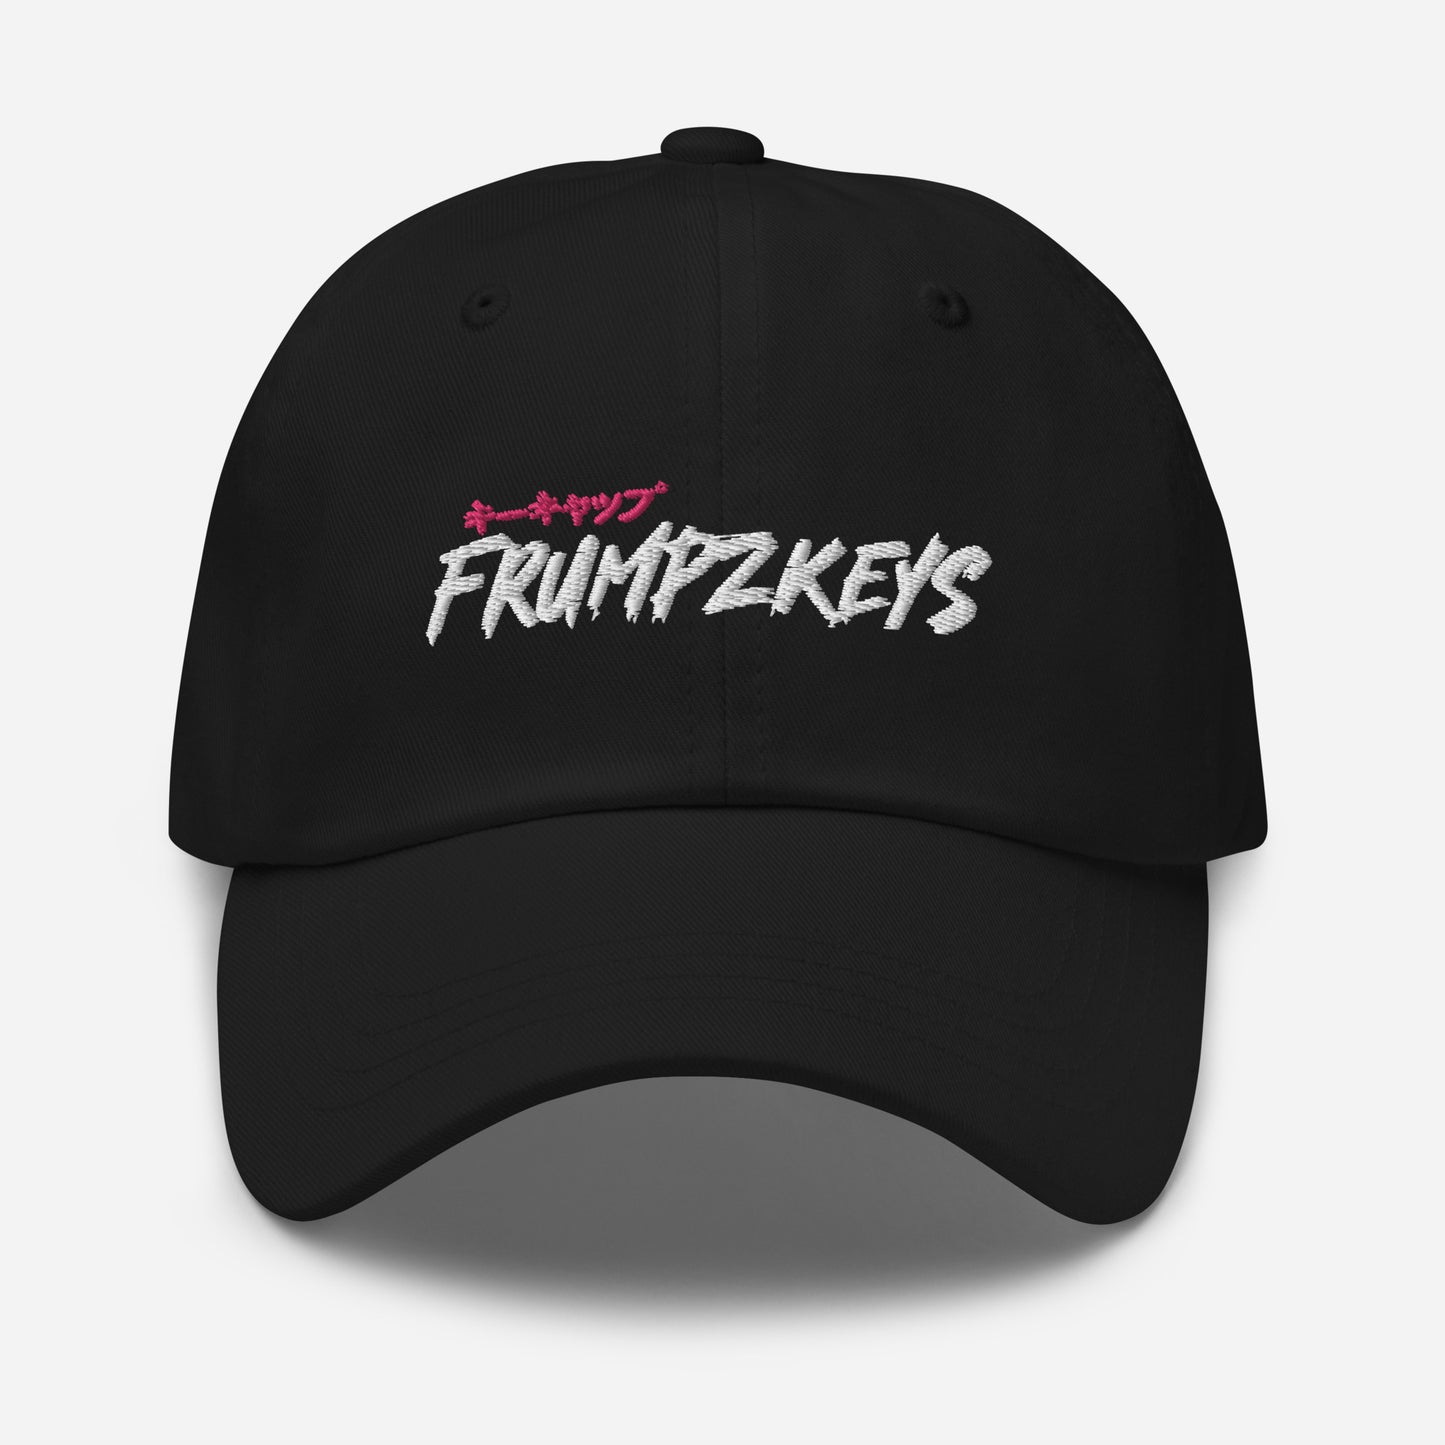 FRUMPZKEYS Dad Hat